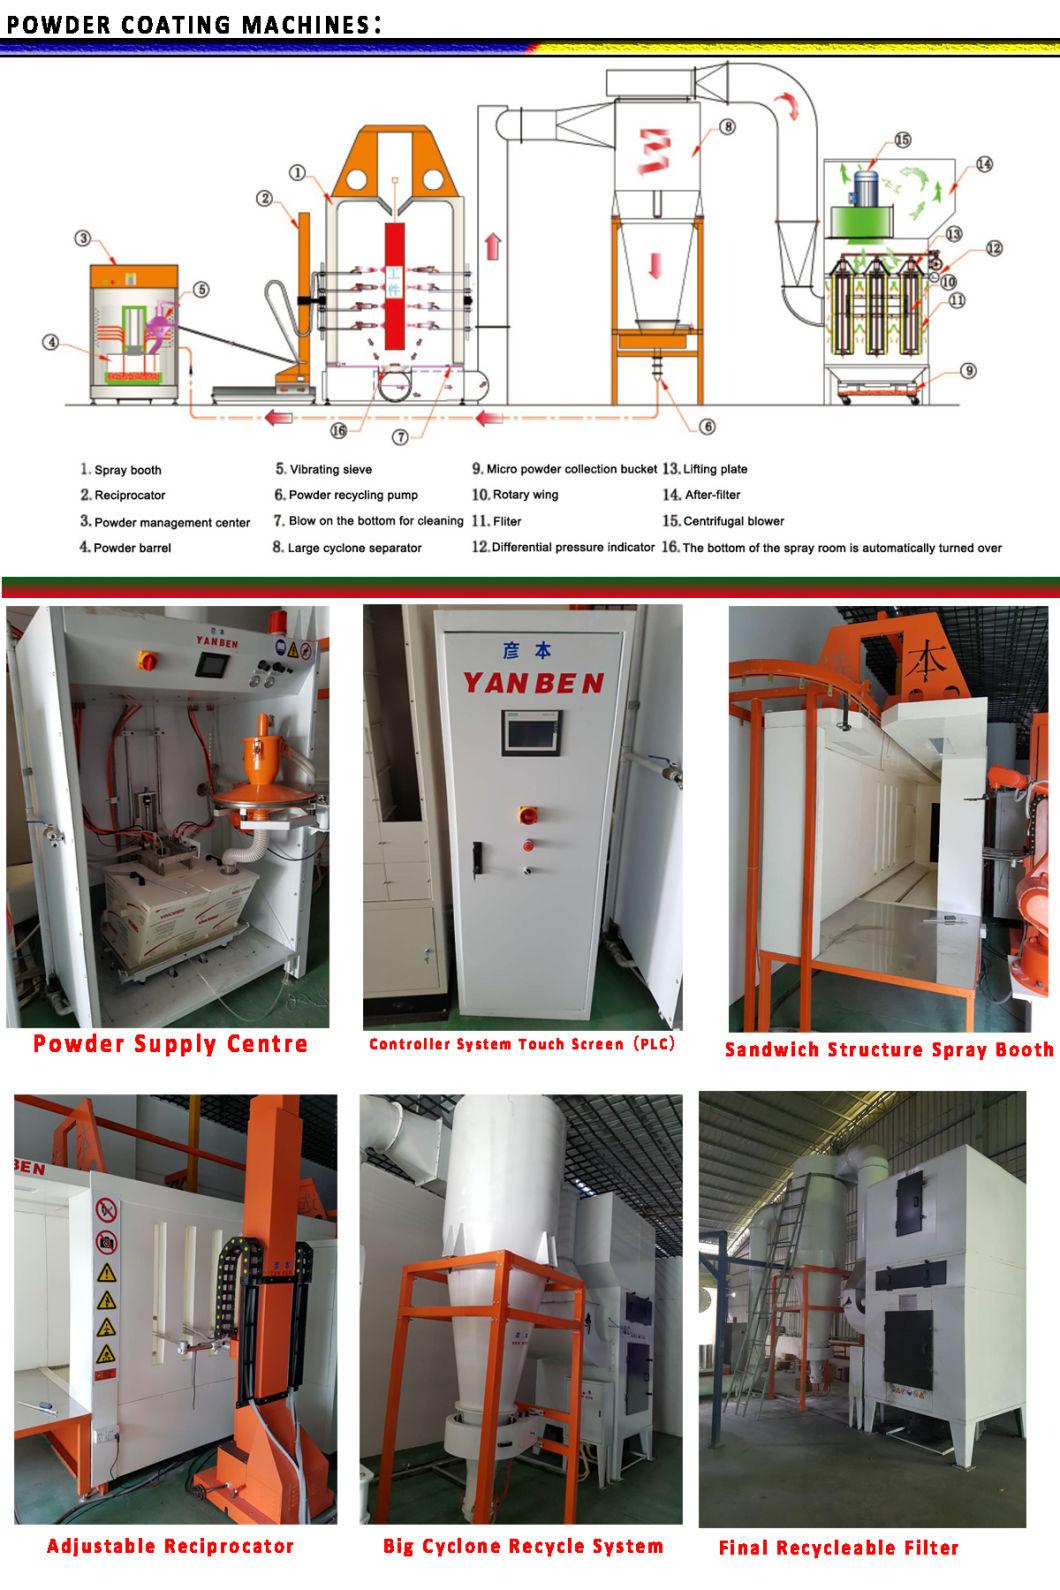 Automatic Spraying Equipment Reciprocator for Powder Coating Machine